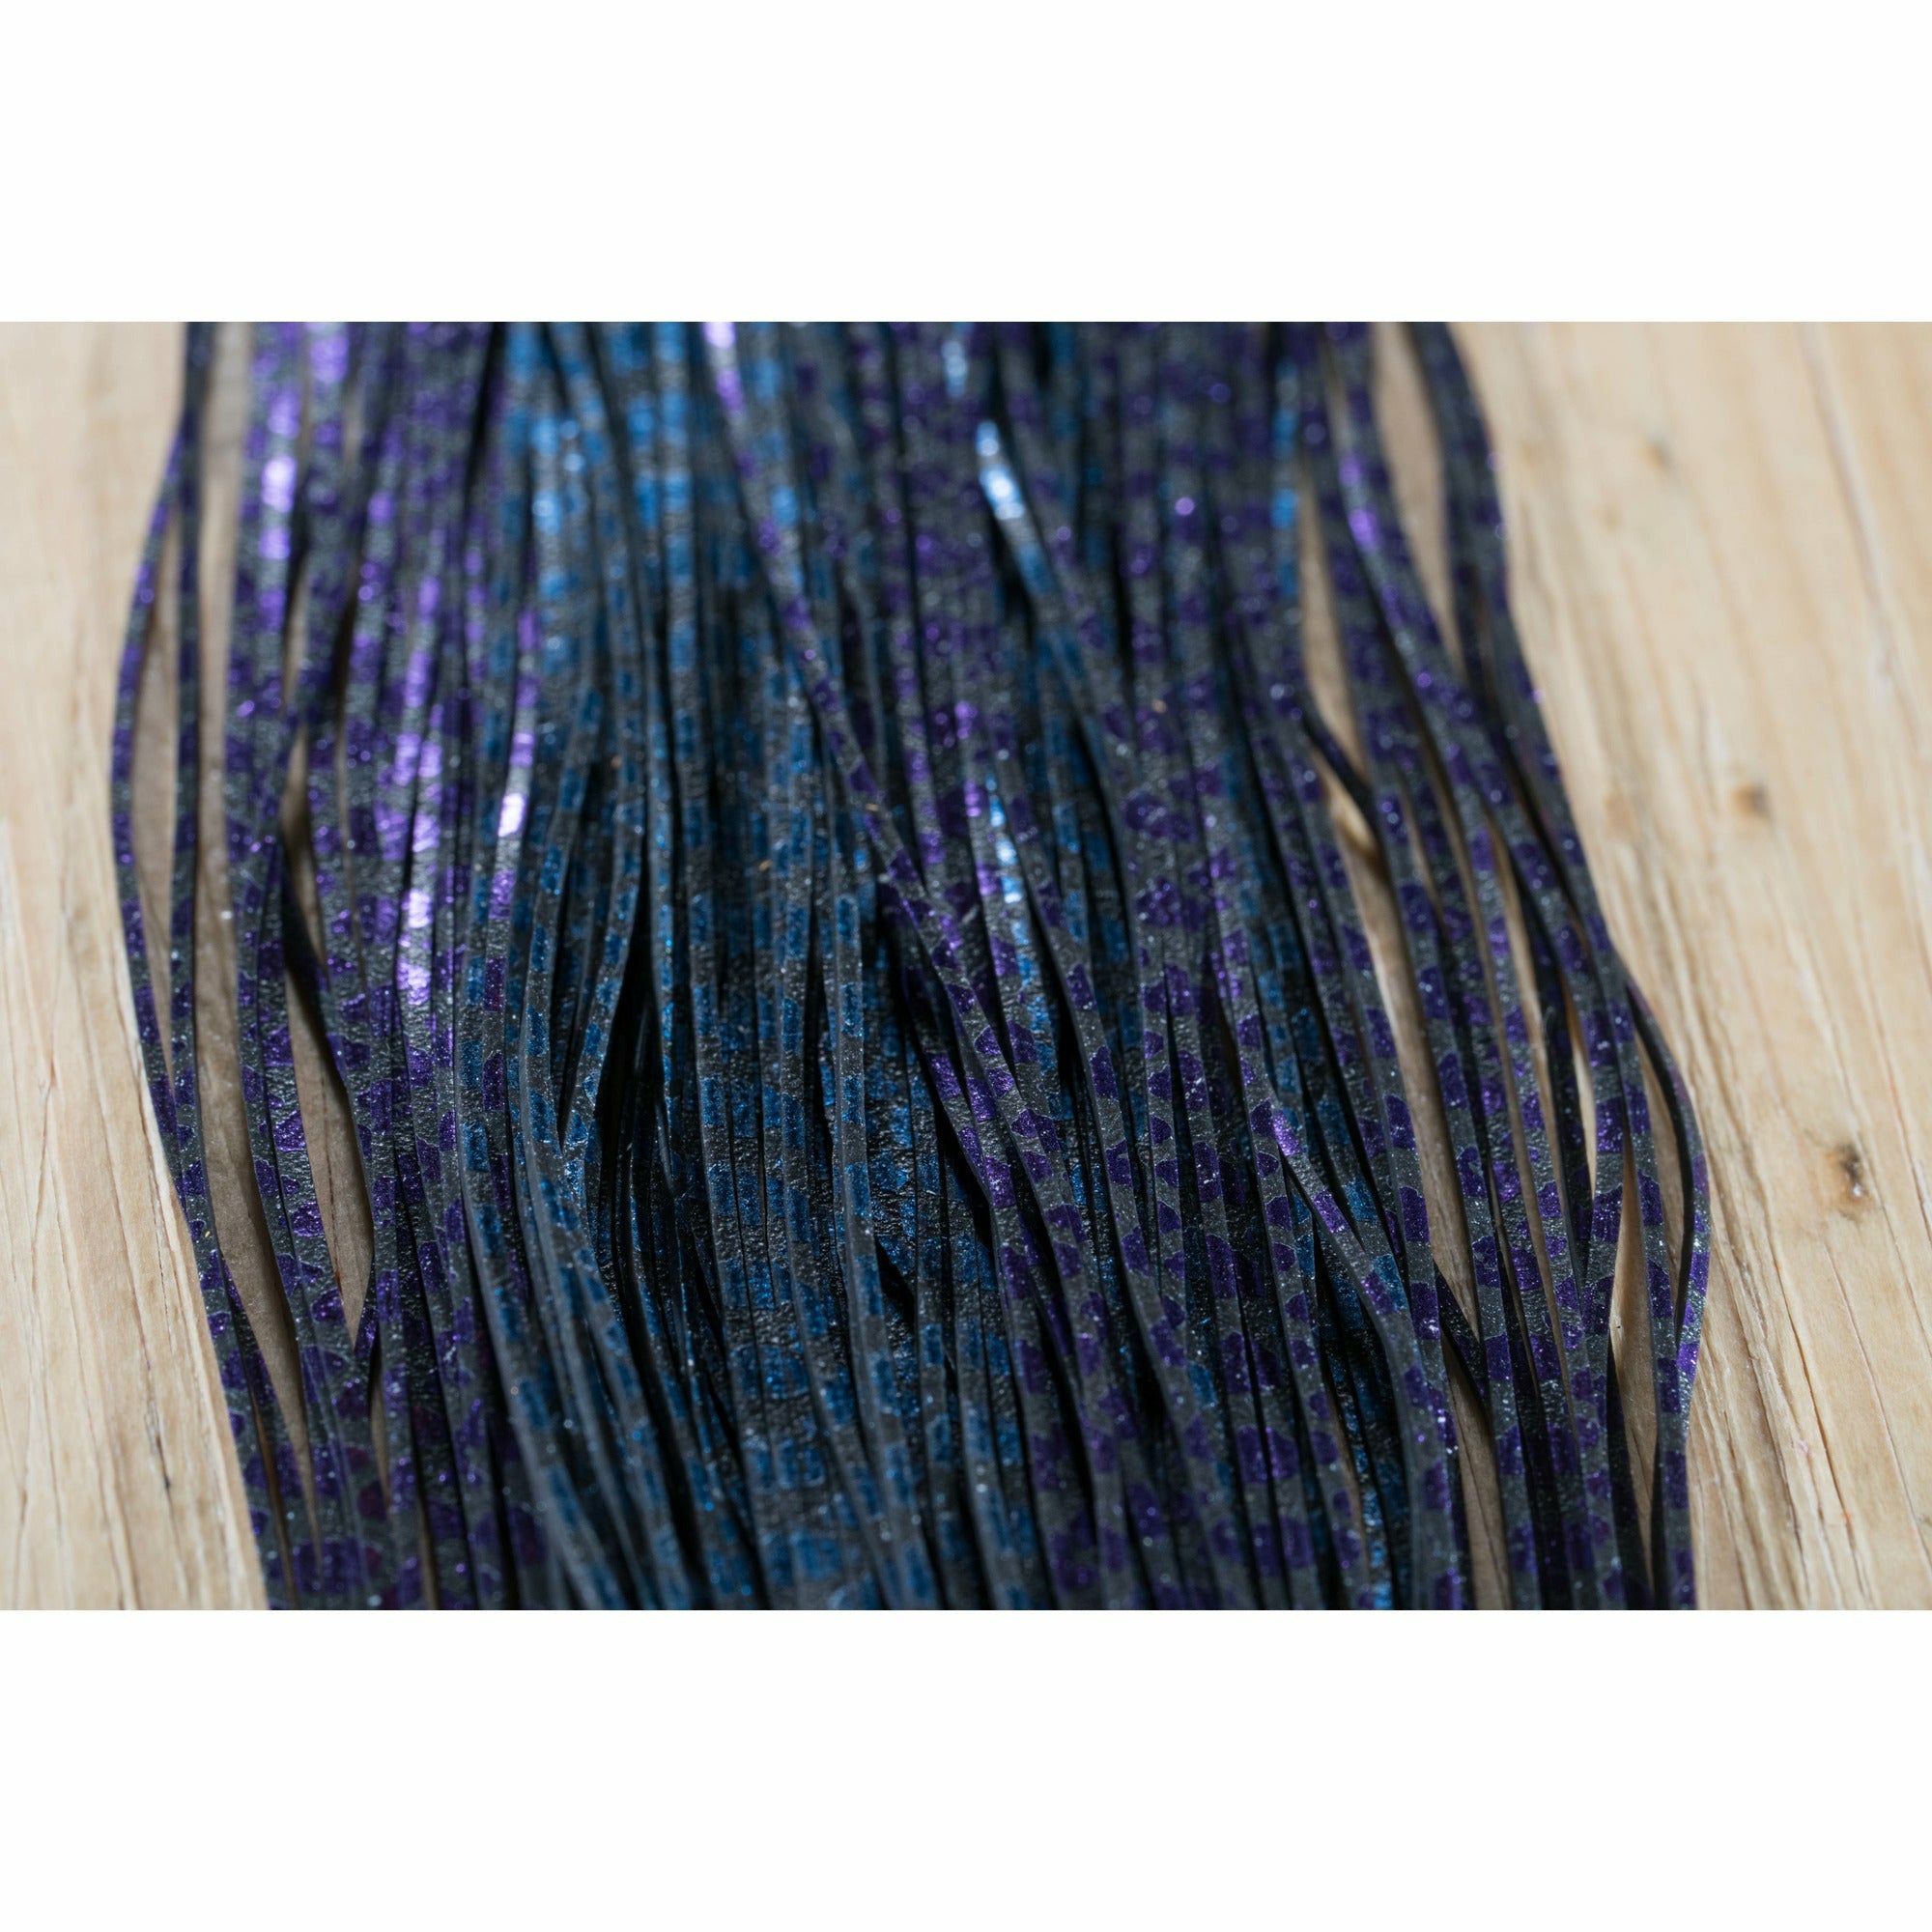 Senyo's Fusion Foil Legs - Barred Blue & Purple Foil